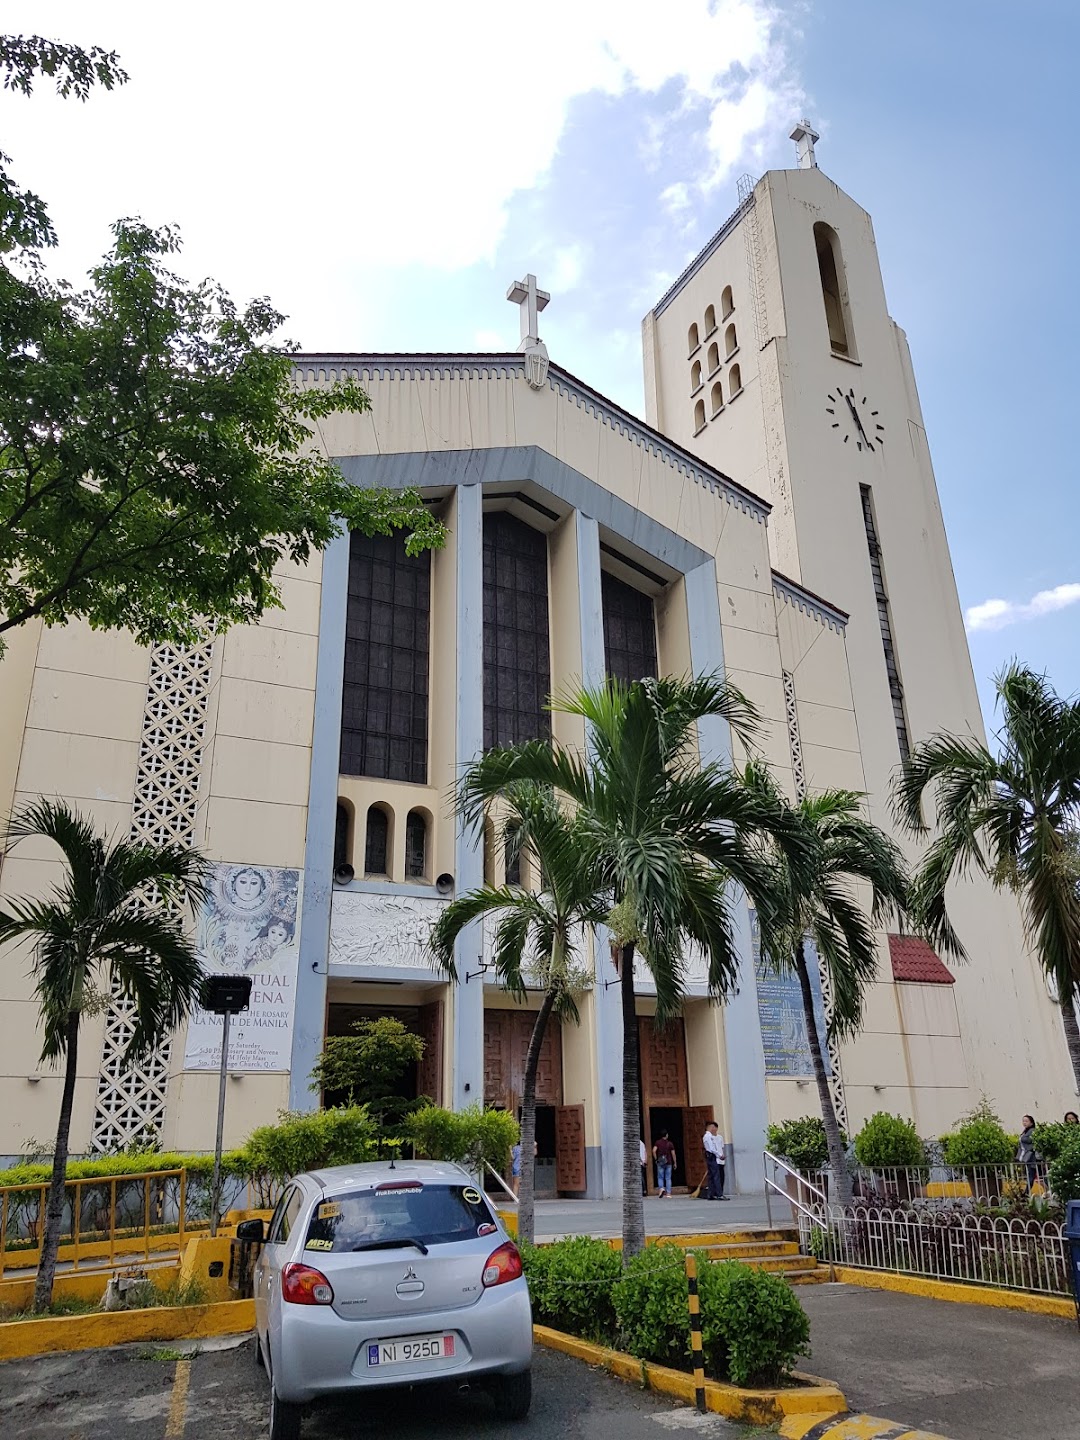 The Santo Domingo Church and Convent